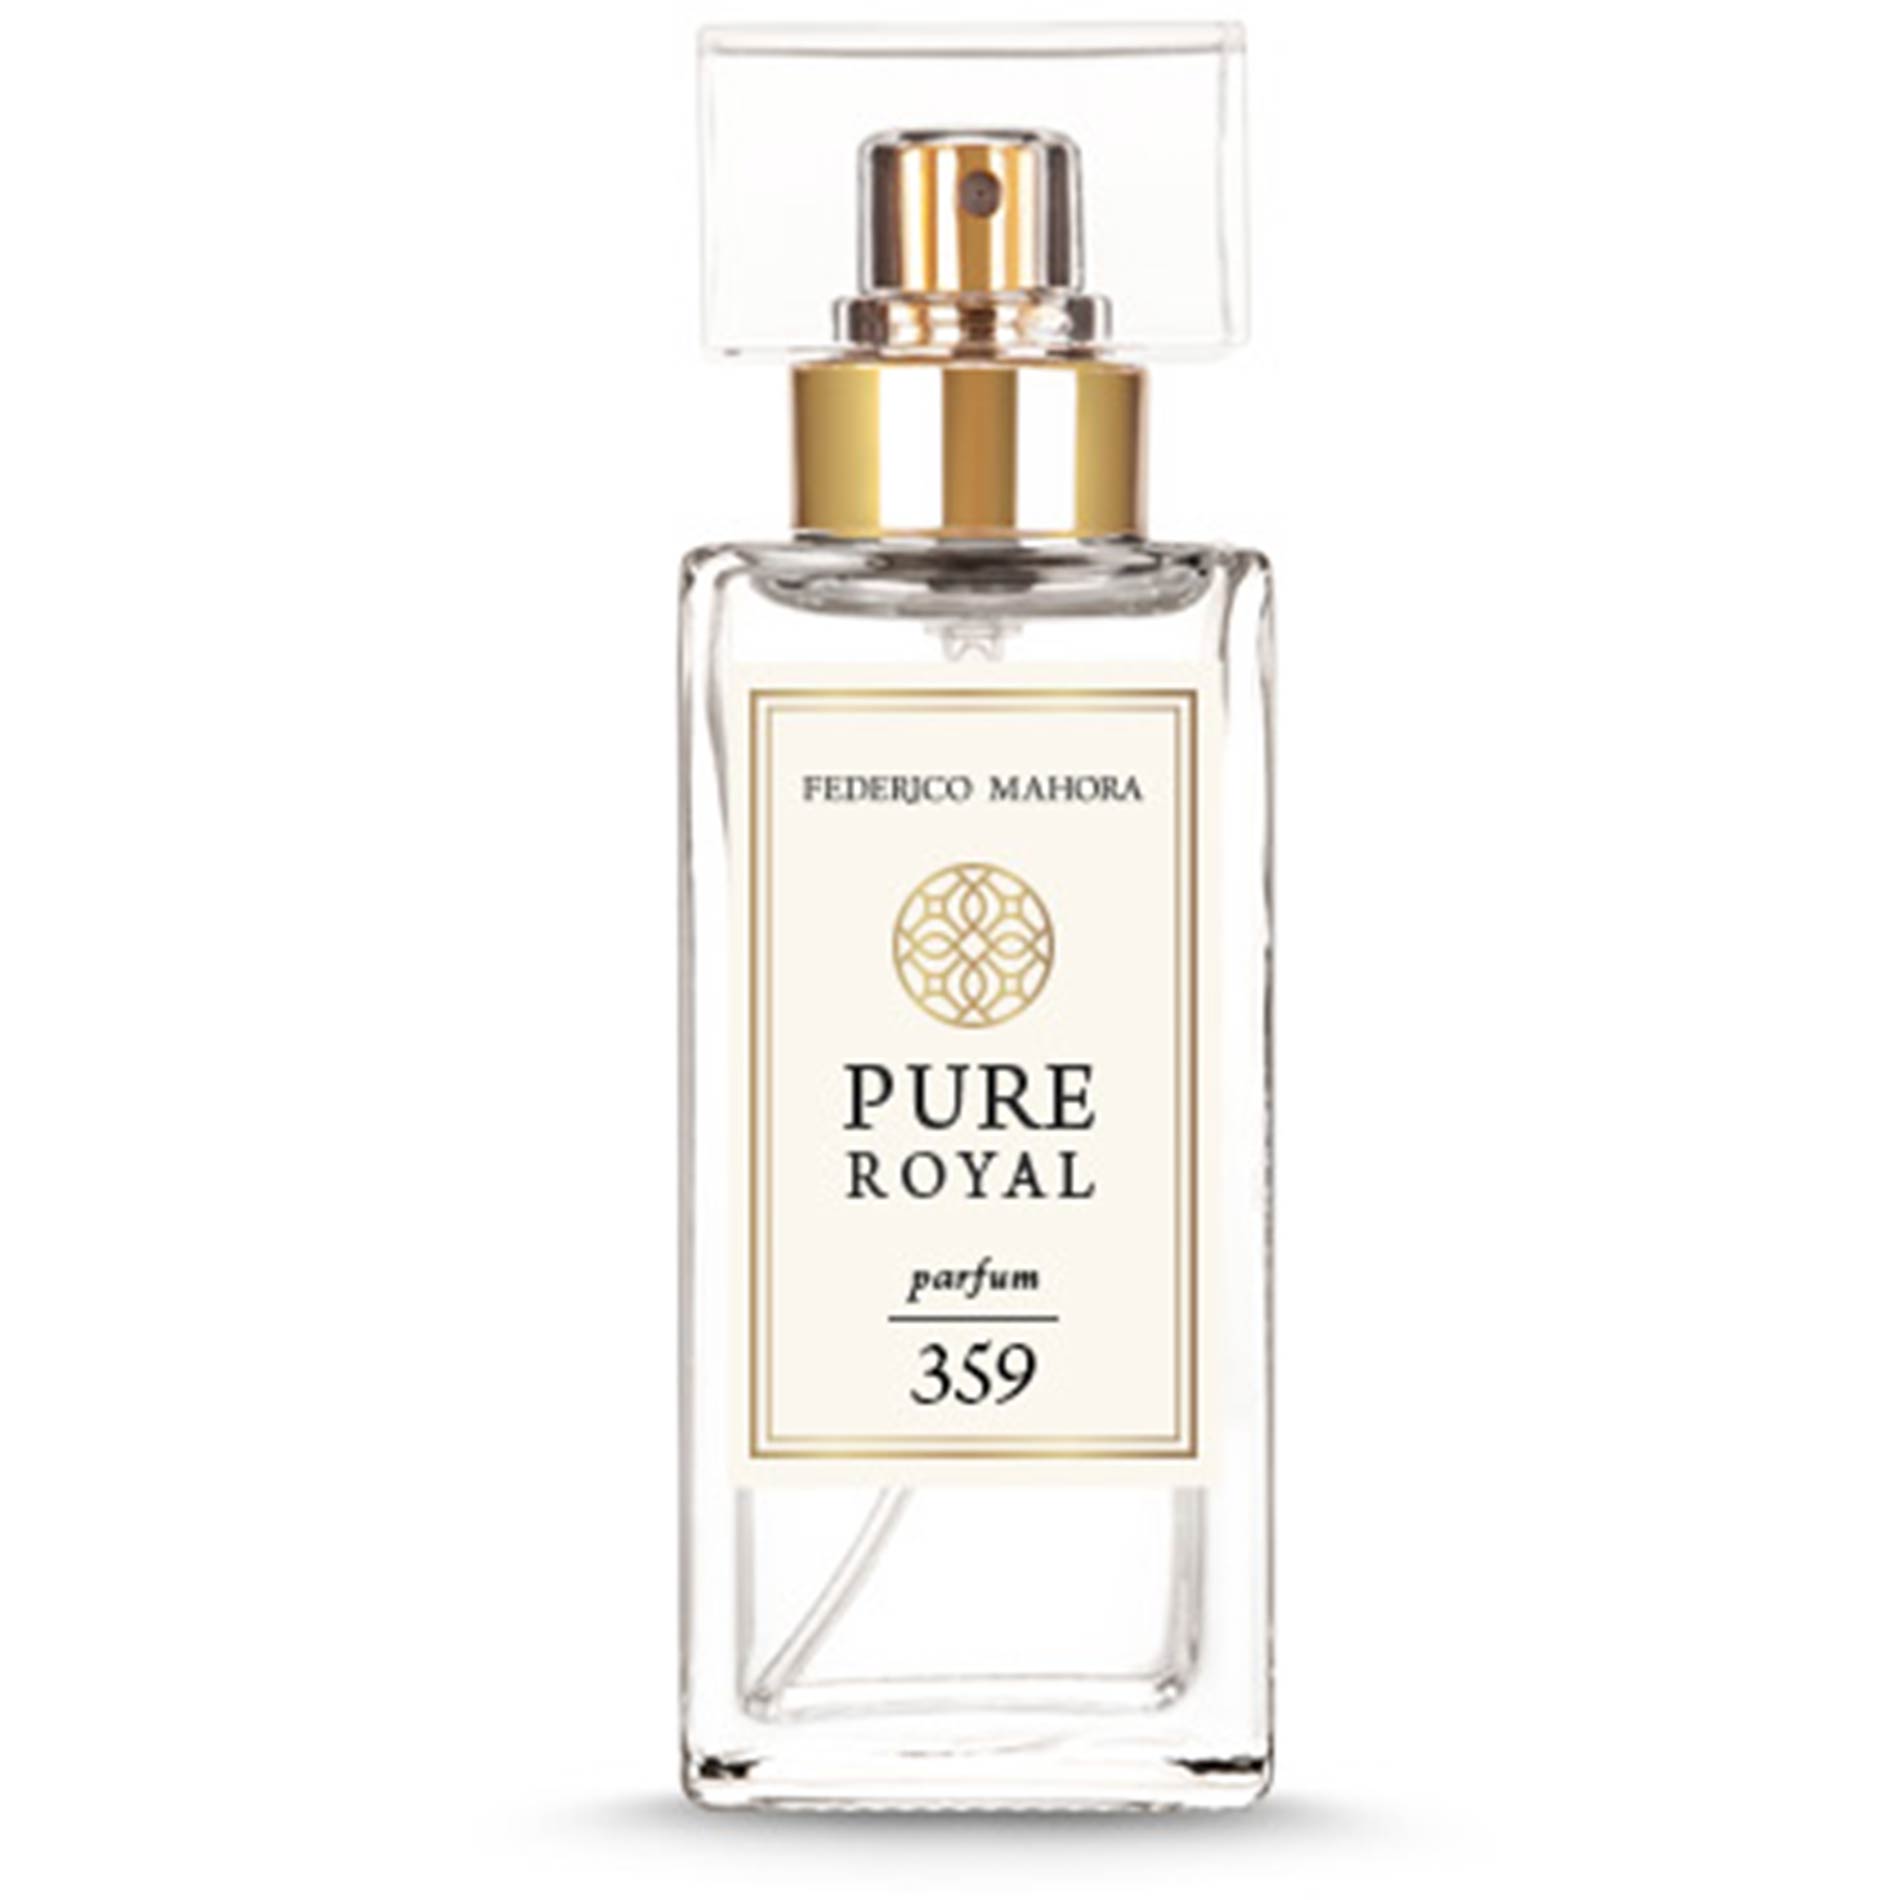 PURE ROYAL 359 Parfum Federico Mahora